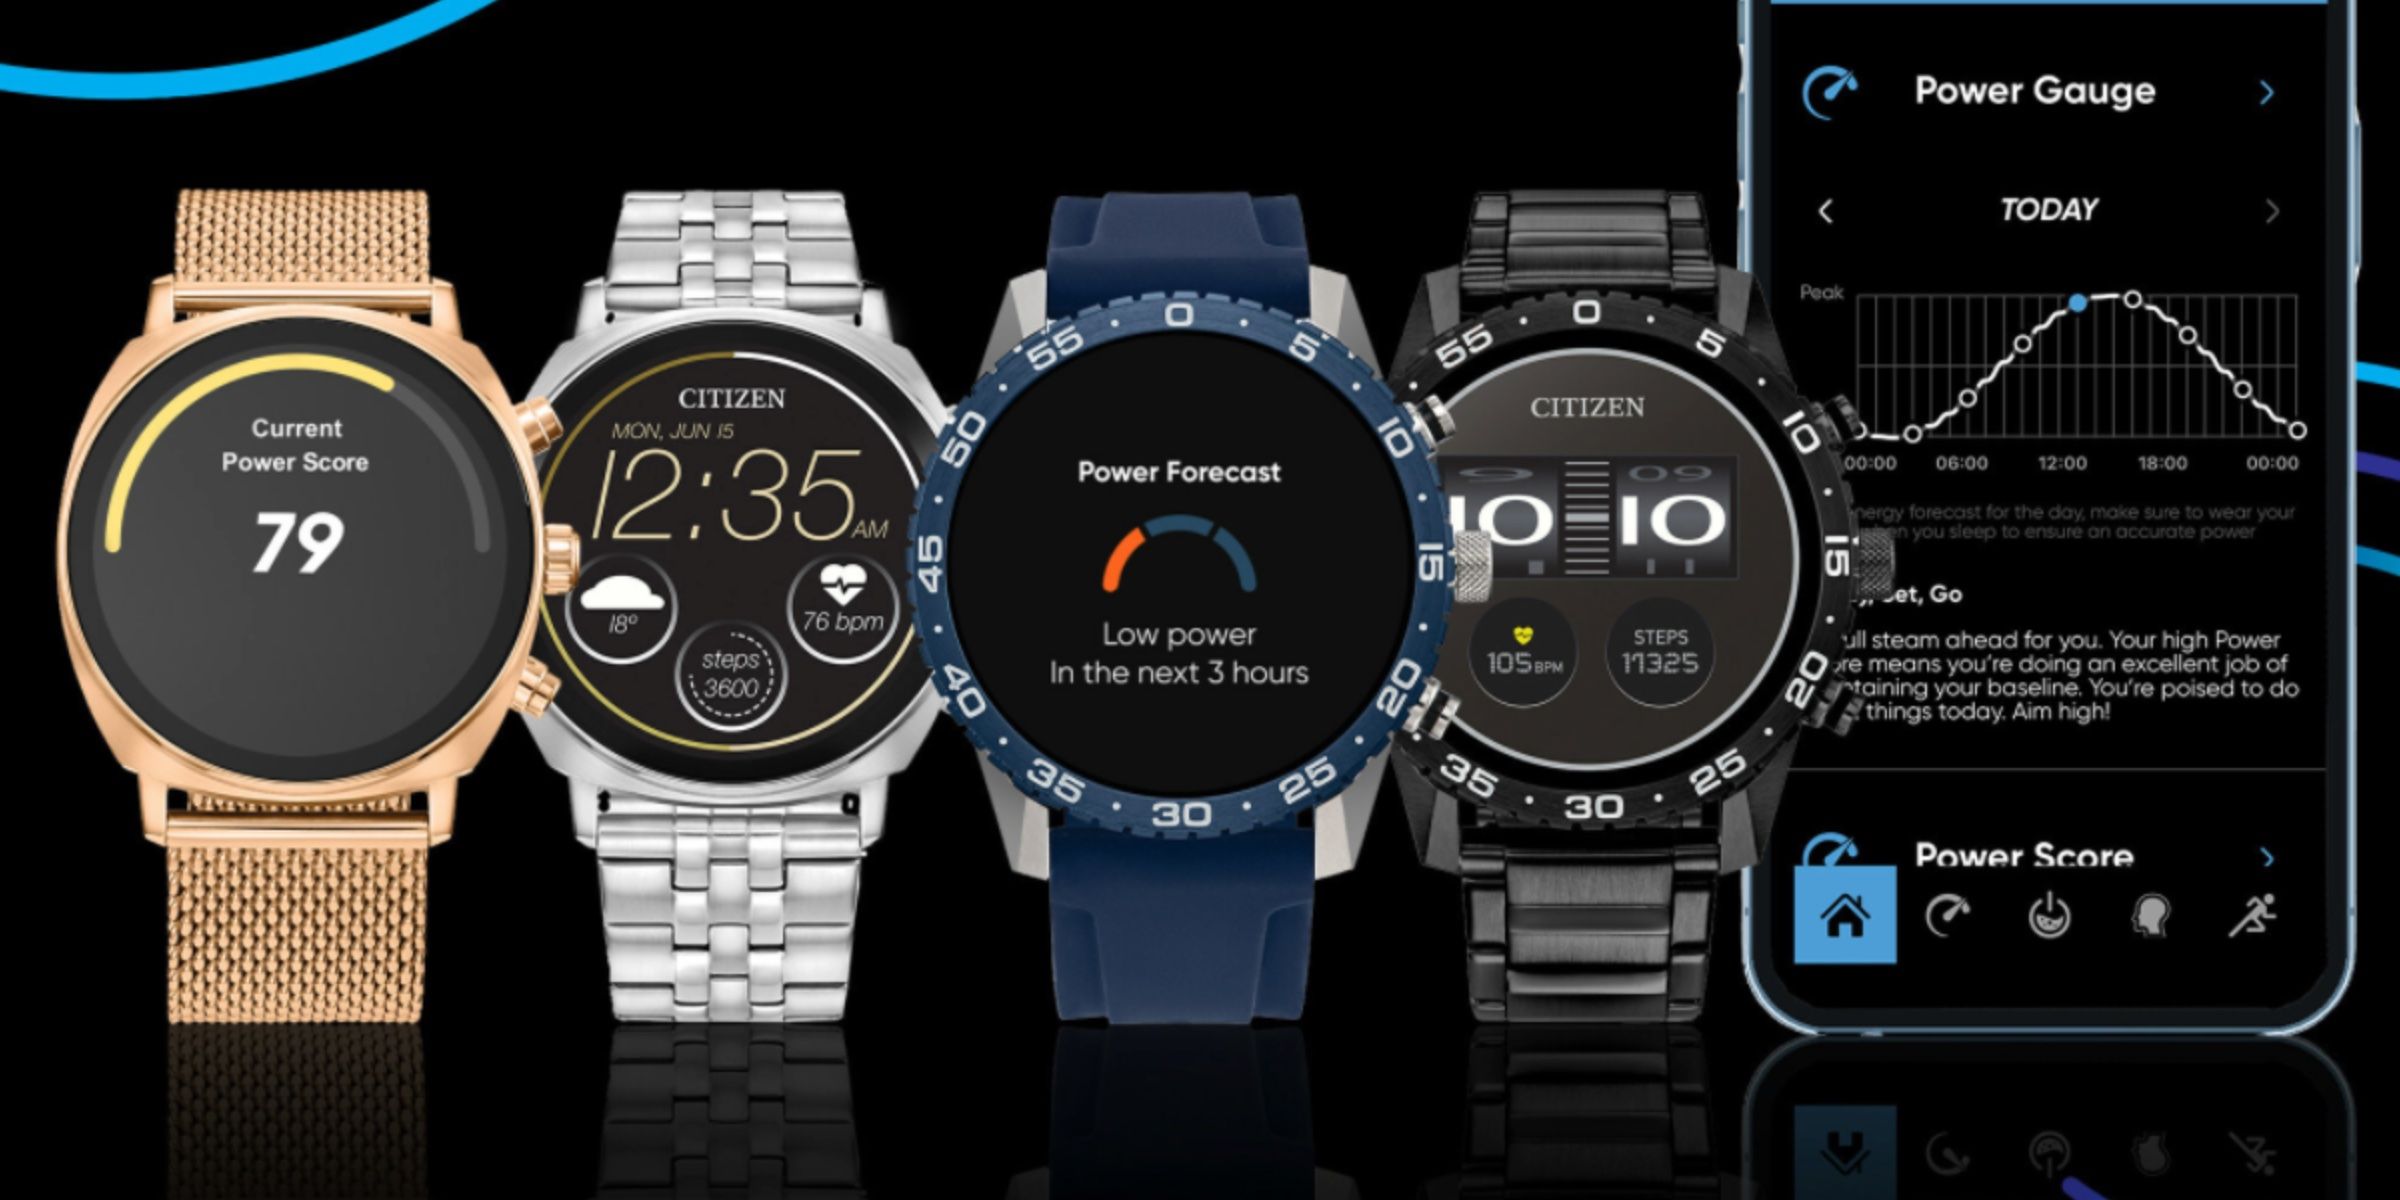 Four smartwatches in Citizen's CZ Smart lineup alongside their companion mobile app.